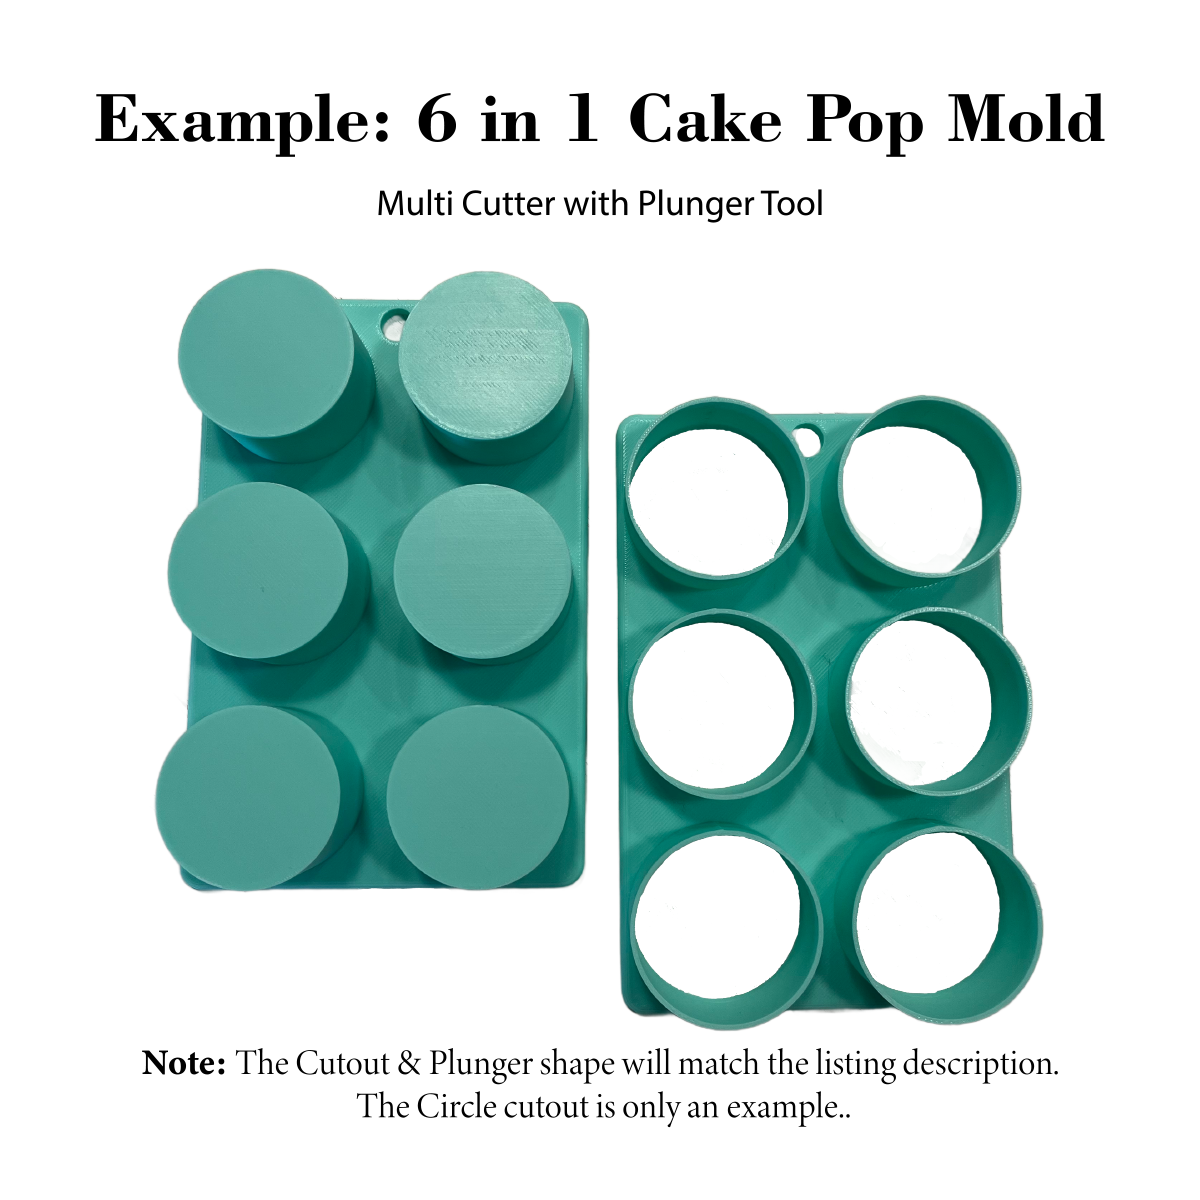 Square Cake Pop Mold | Single or Multi-popper